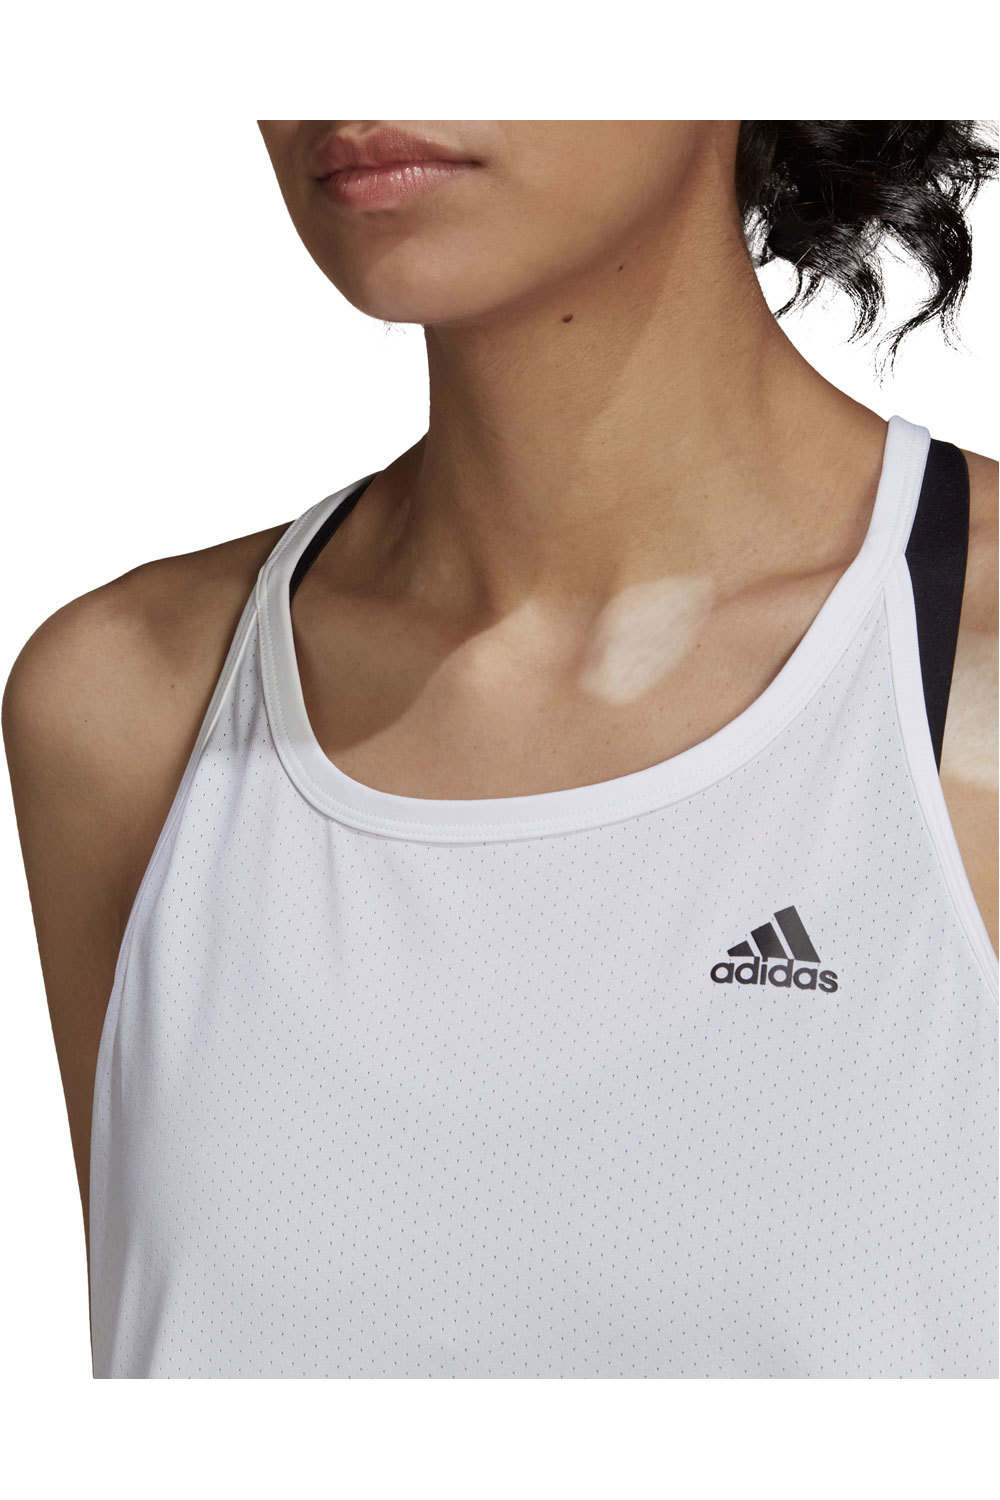 adidas camiseta técnica tirantes mujer Parley Run Fast Running (sin mangas) vista detalle